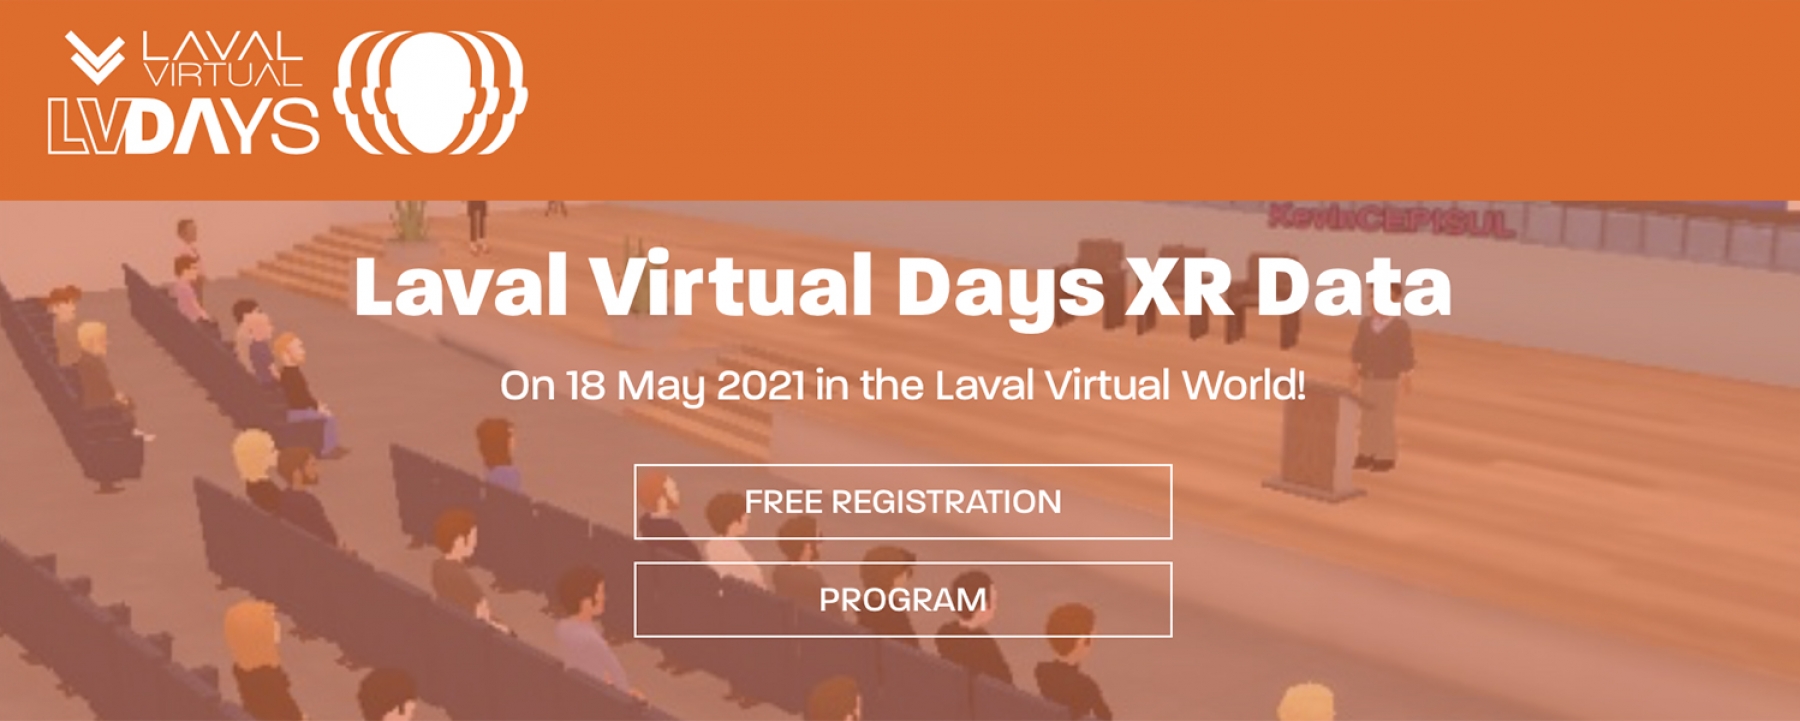 Laval Virtual Days XR Data, organisé par Laval Virtual le 18 mai